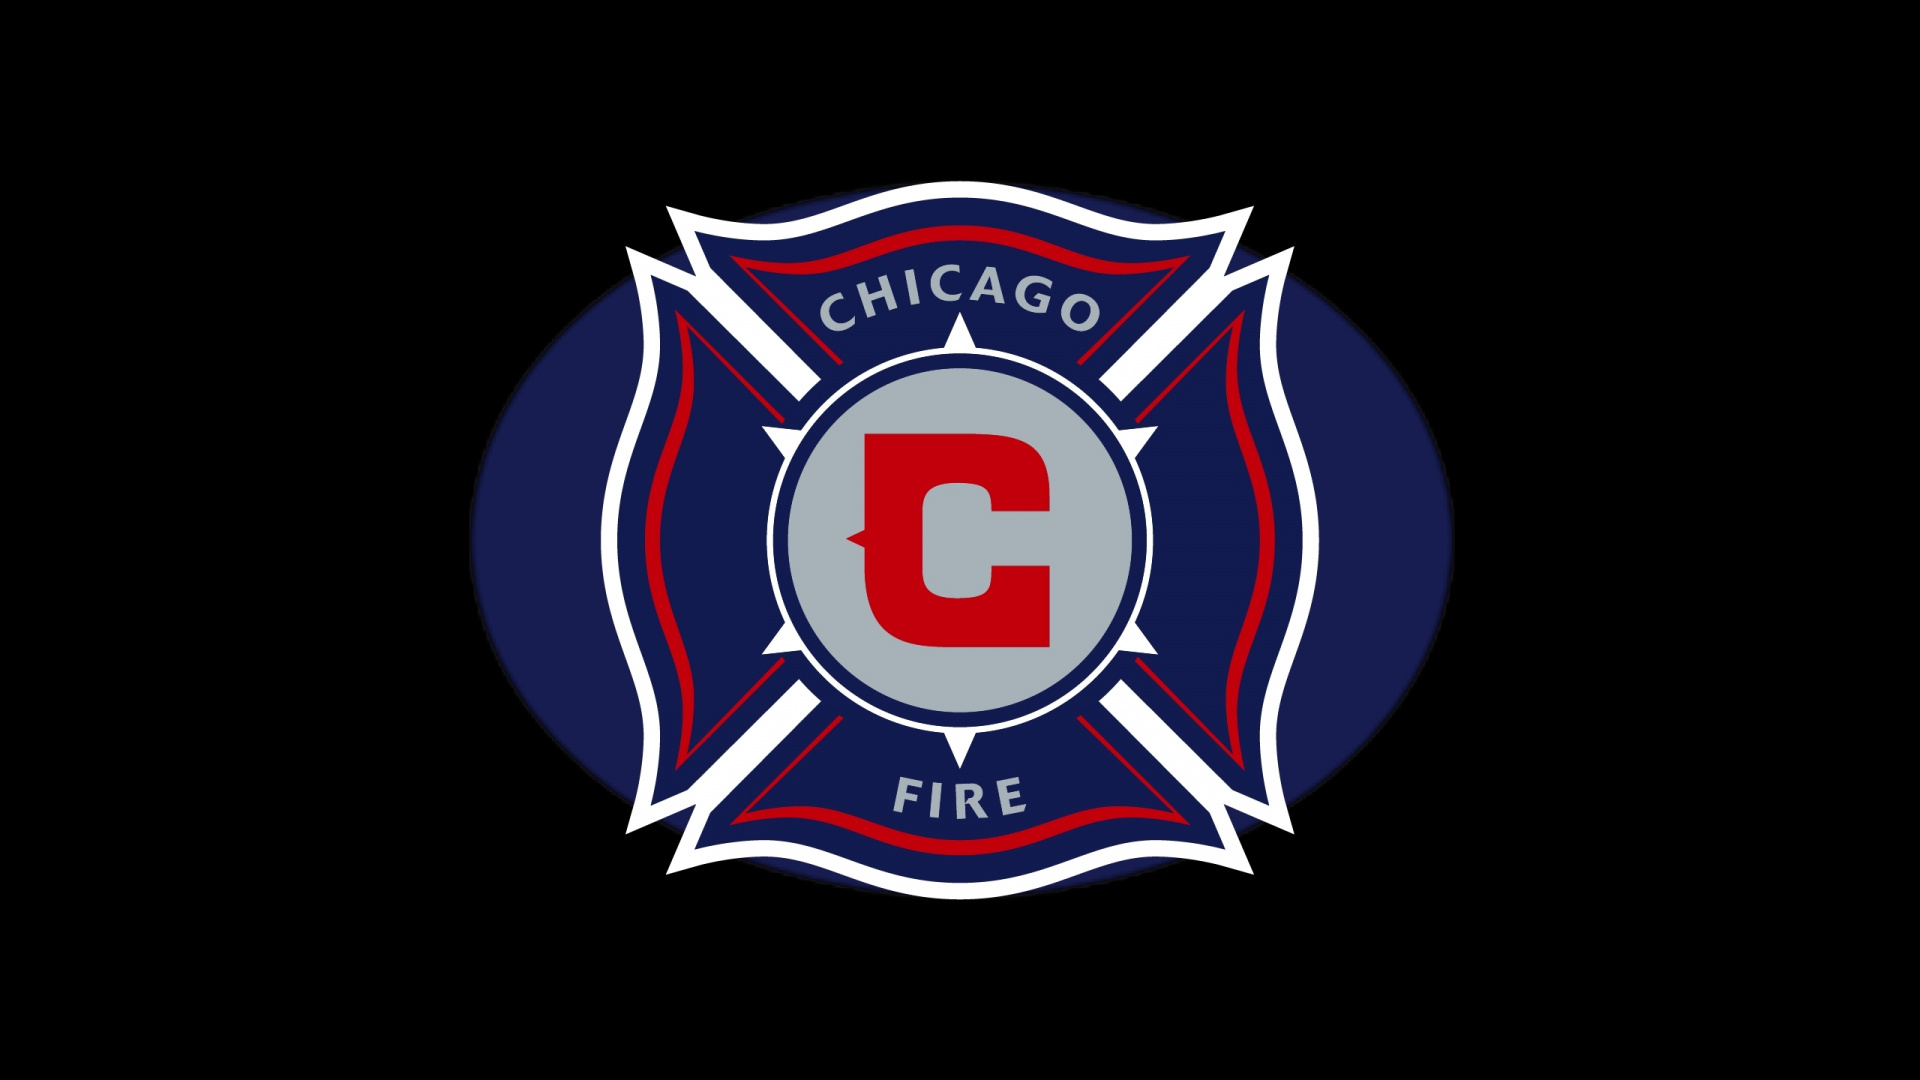 Chicago Fire logo, Soccer club pride, Team attire, Black wallpaper, 1920x1080 Full HD Desktop